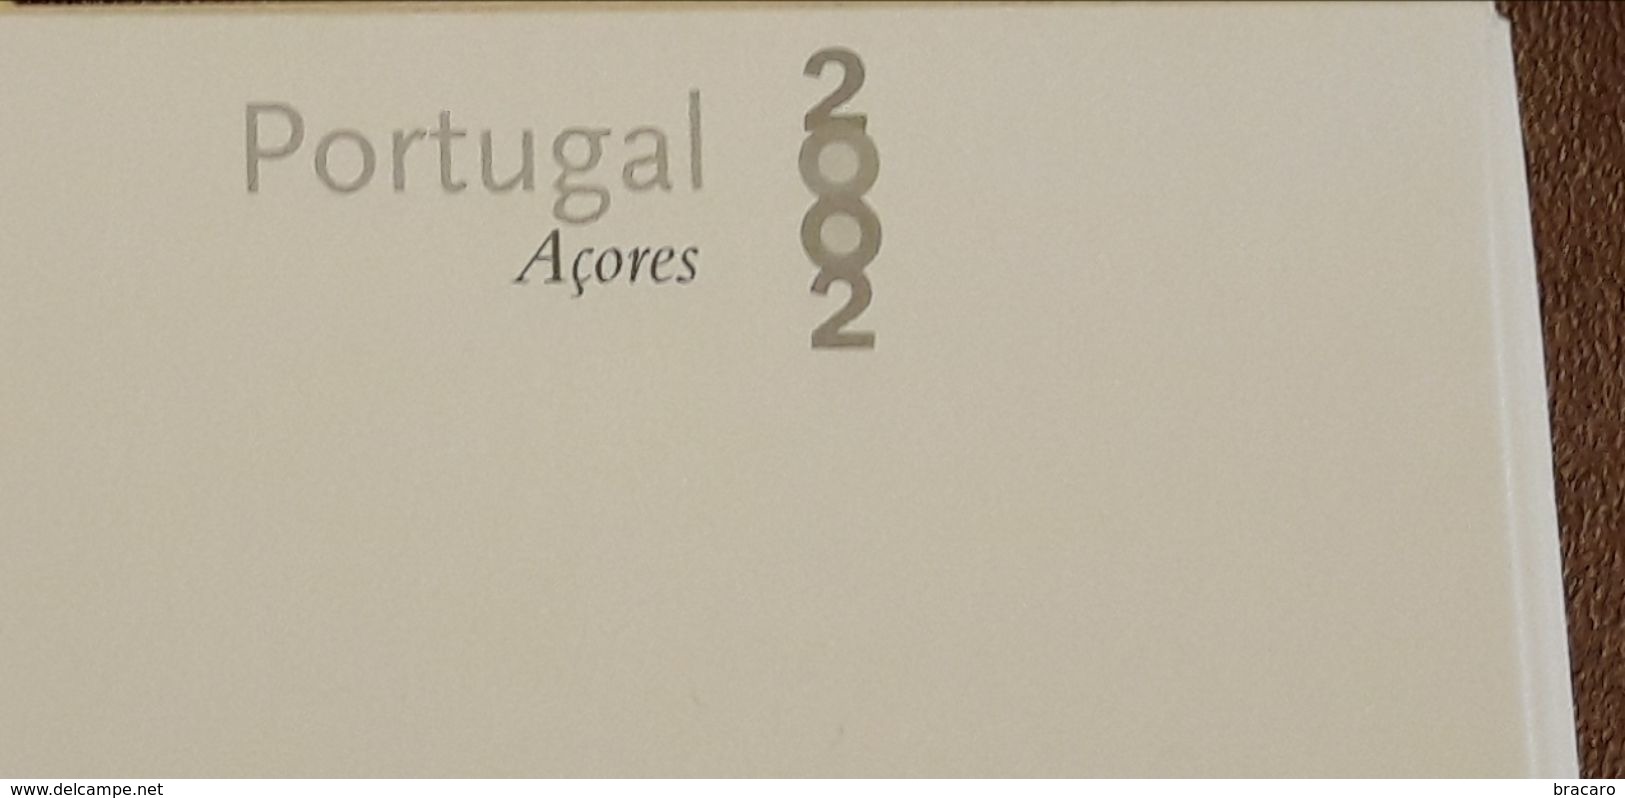 PORTUGAL - ÁLBUM FILATÉLICO - full year stamps + blocks + ATM / machine stamps - MNH - 2006